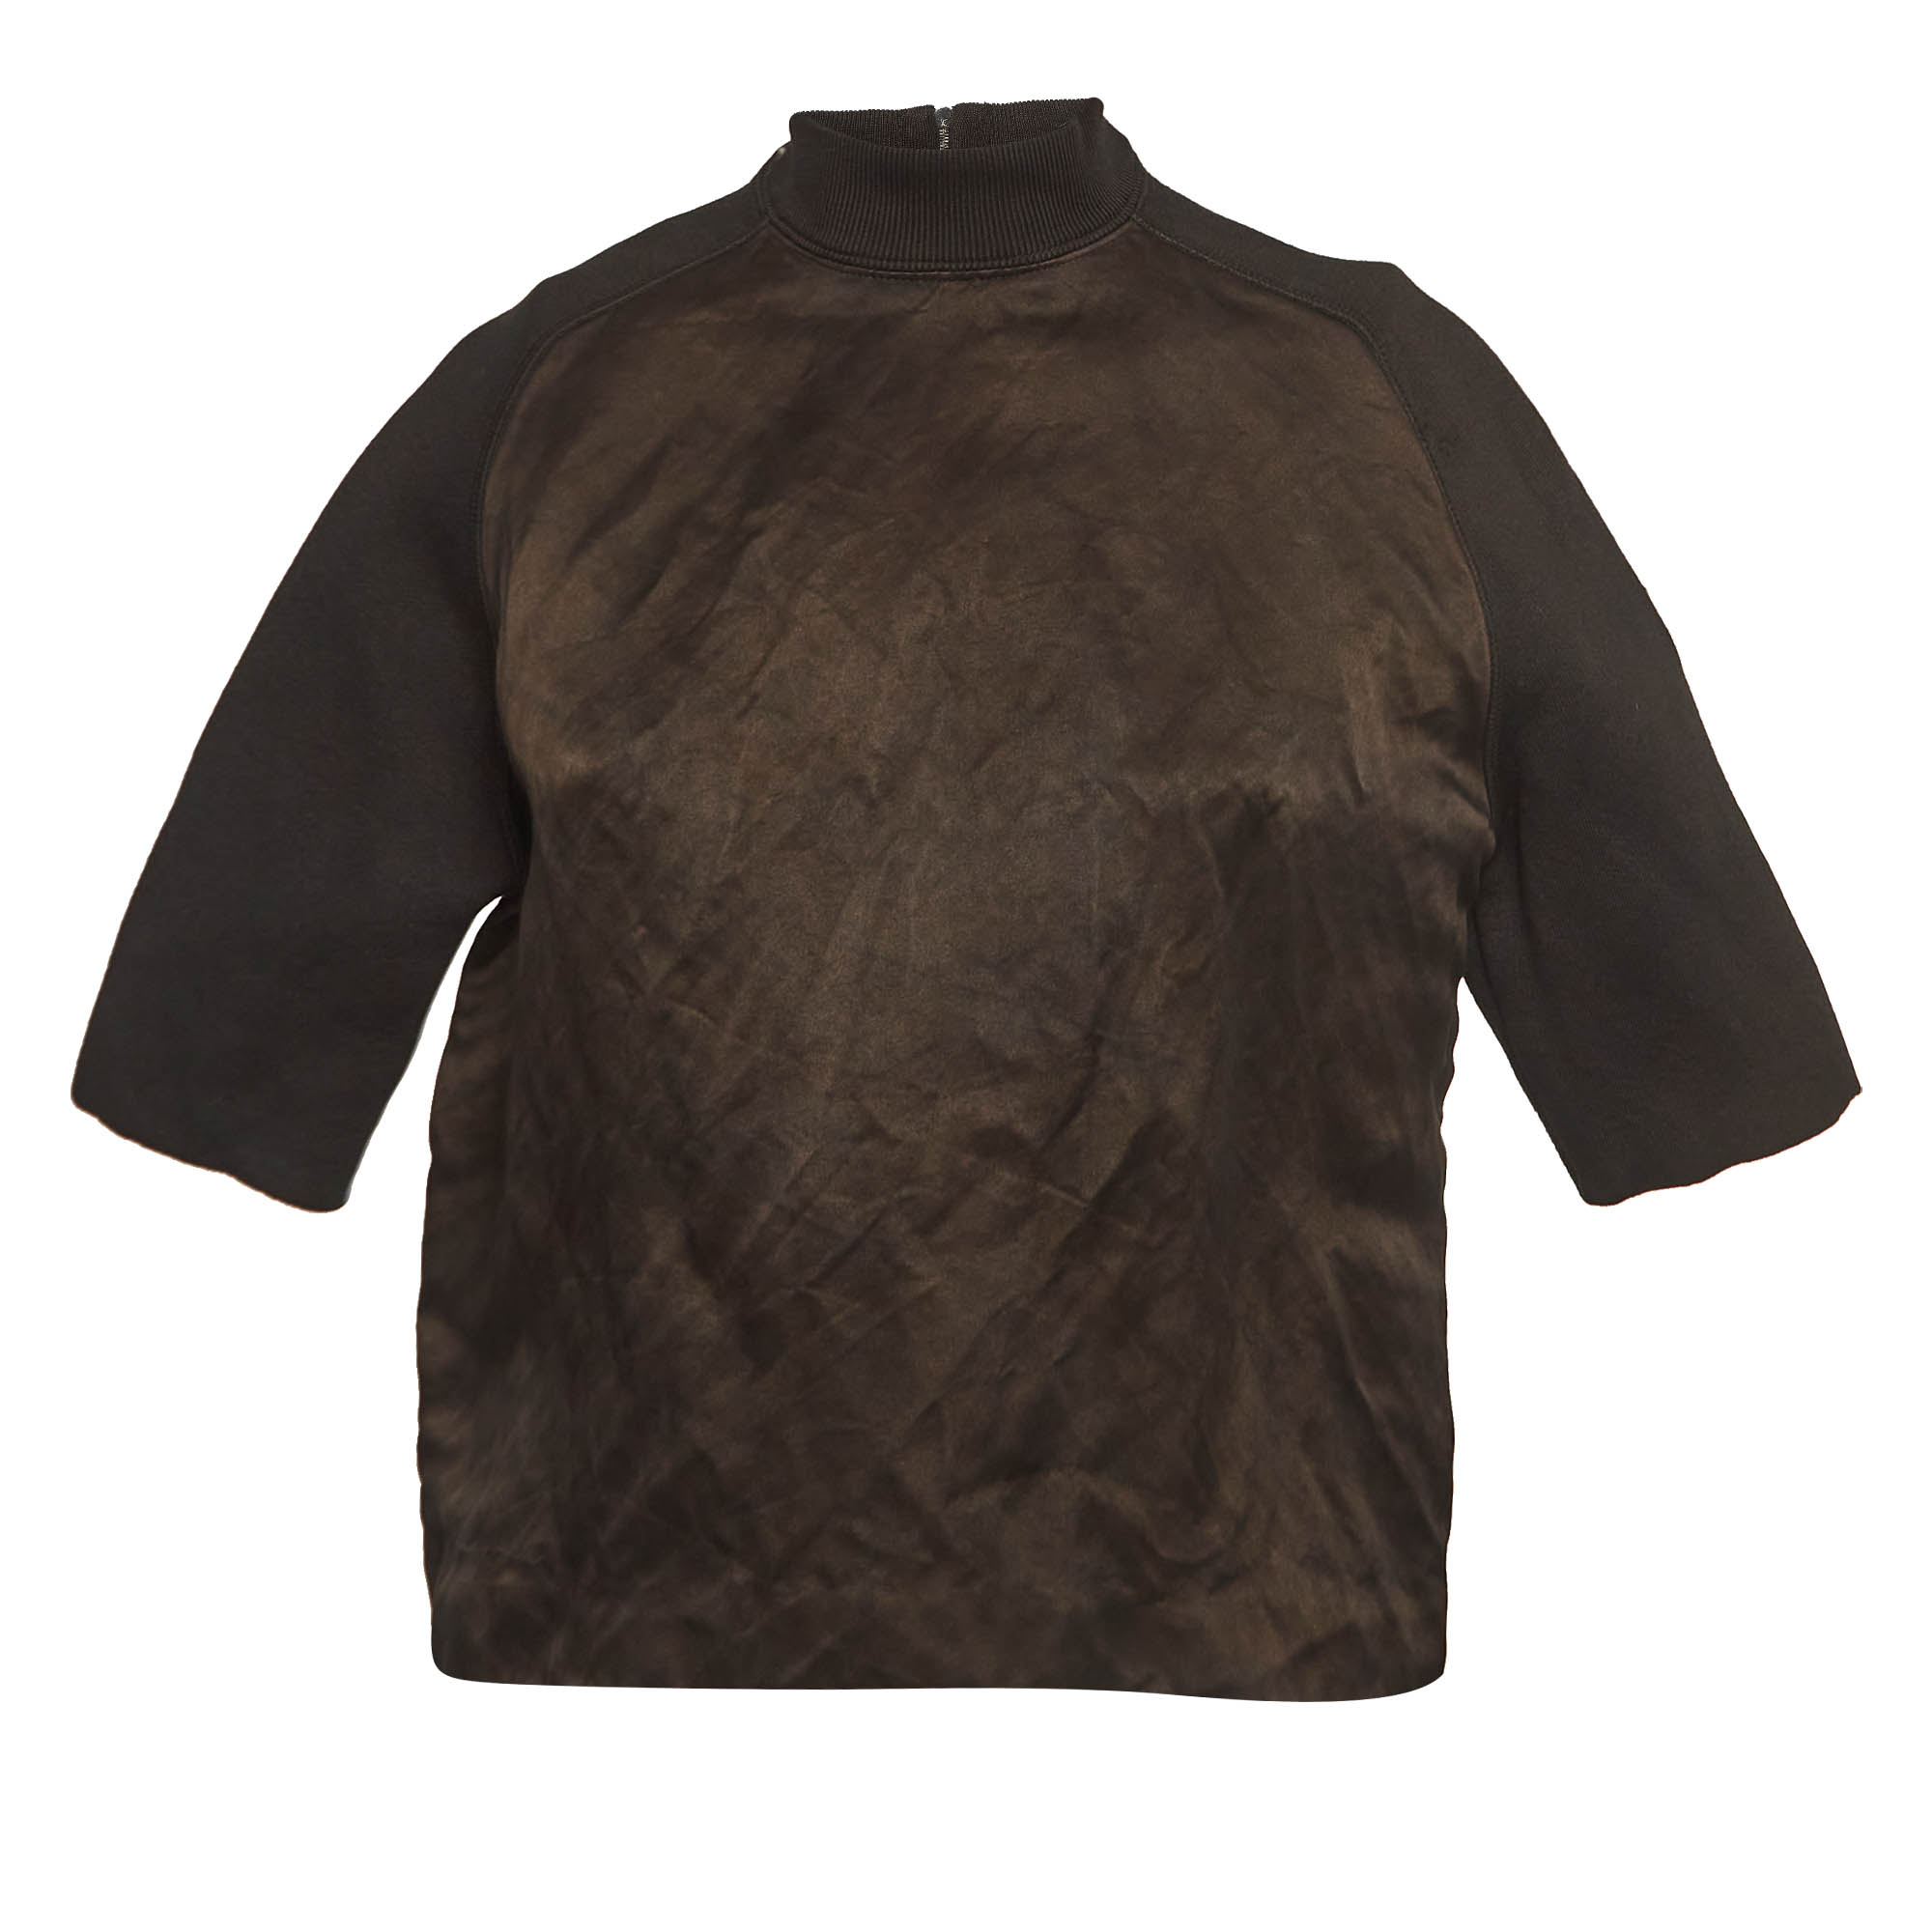 Louis vuitton brown silk and wool blend raglan sleeves t-shirt s